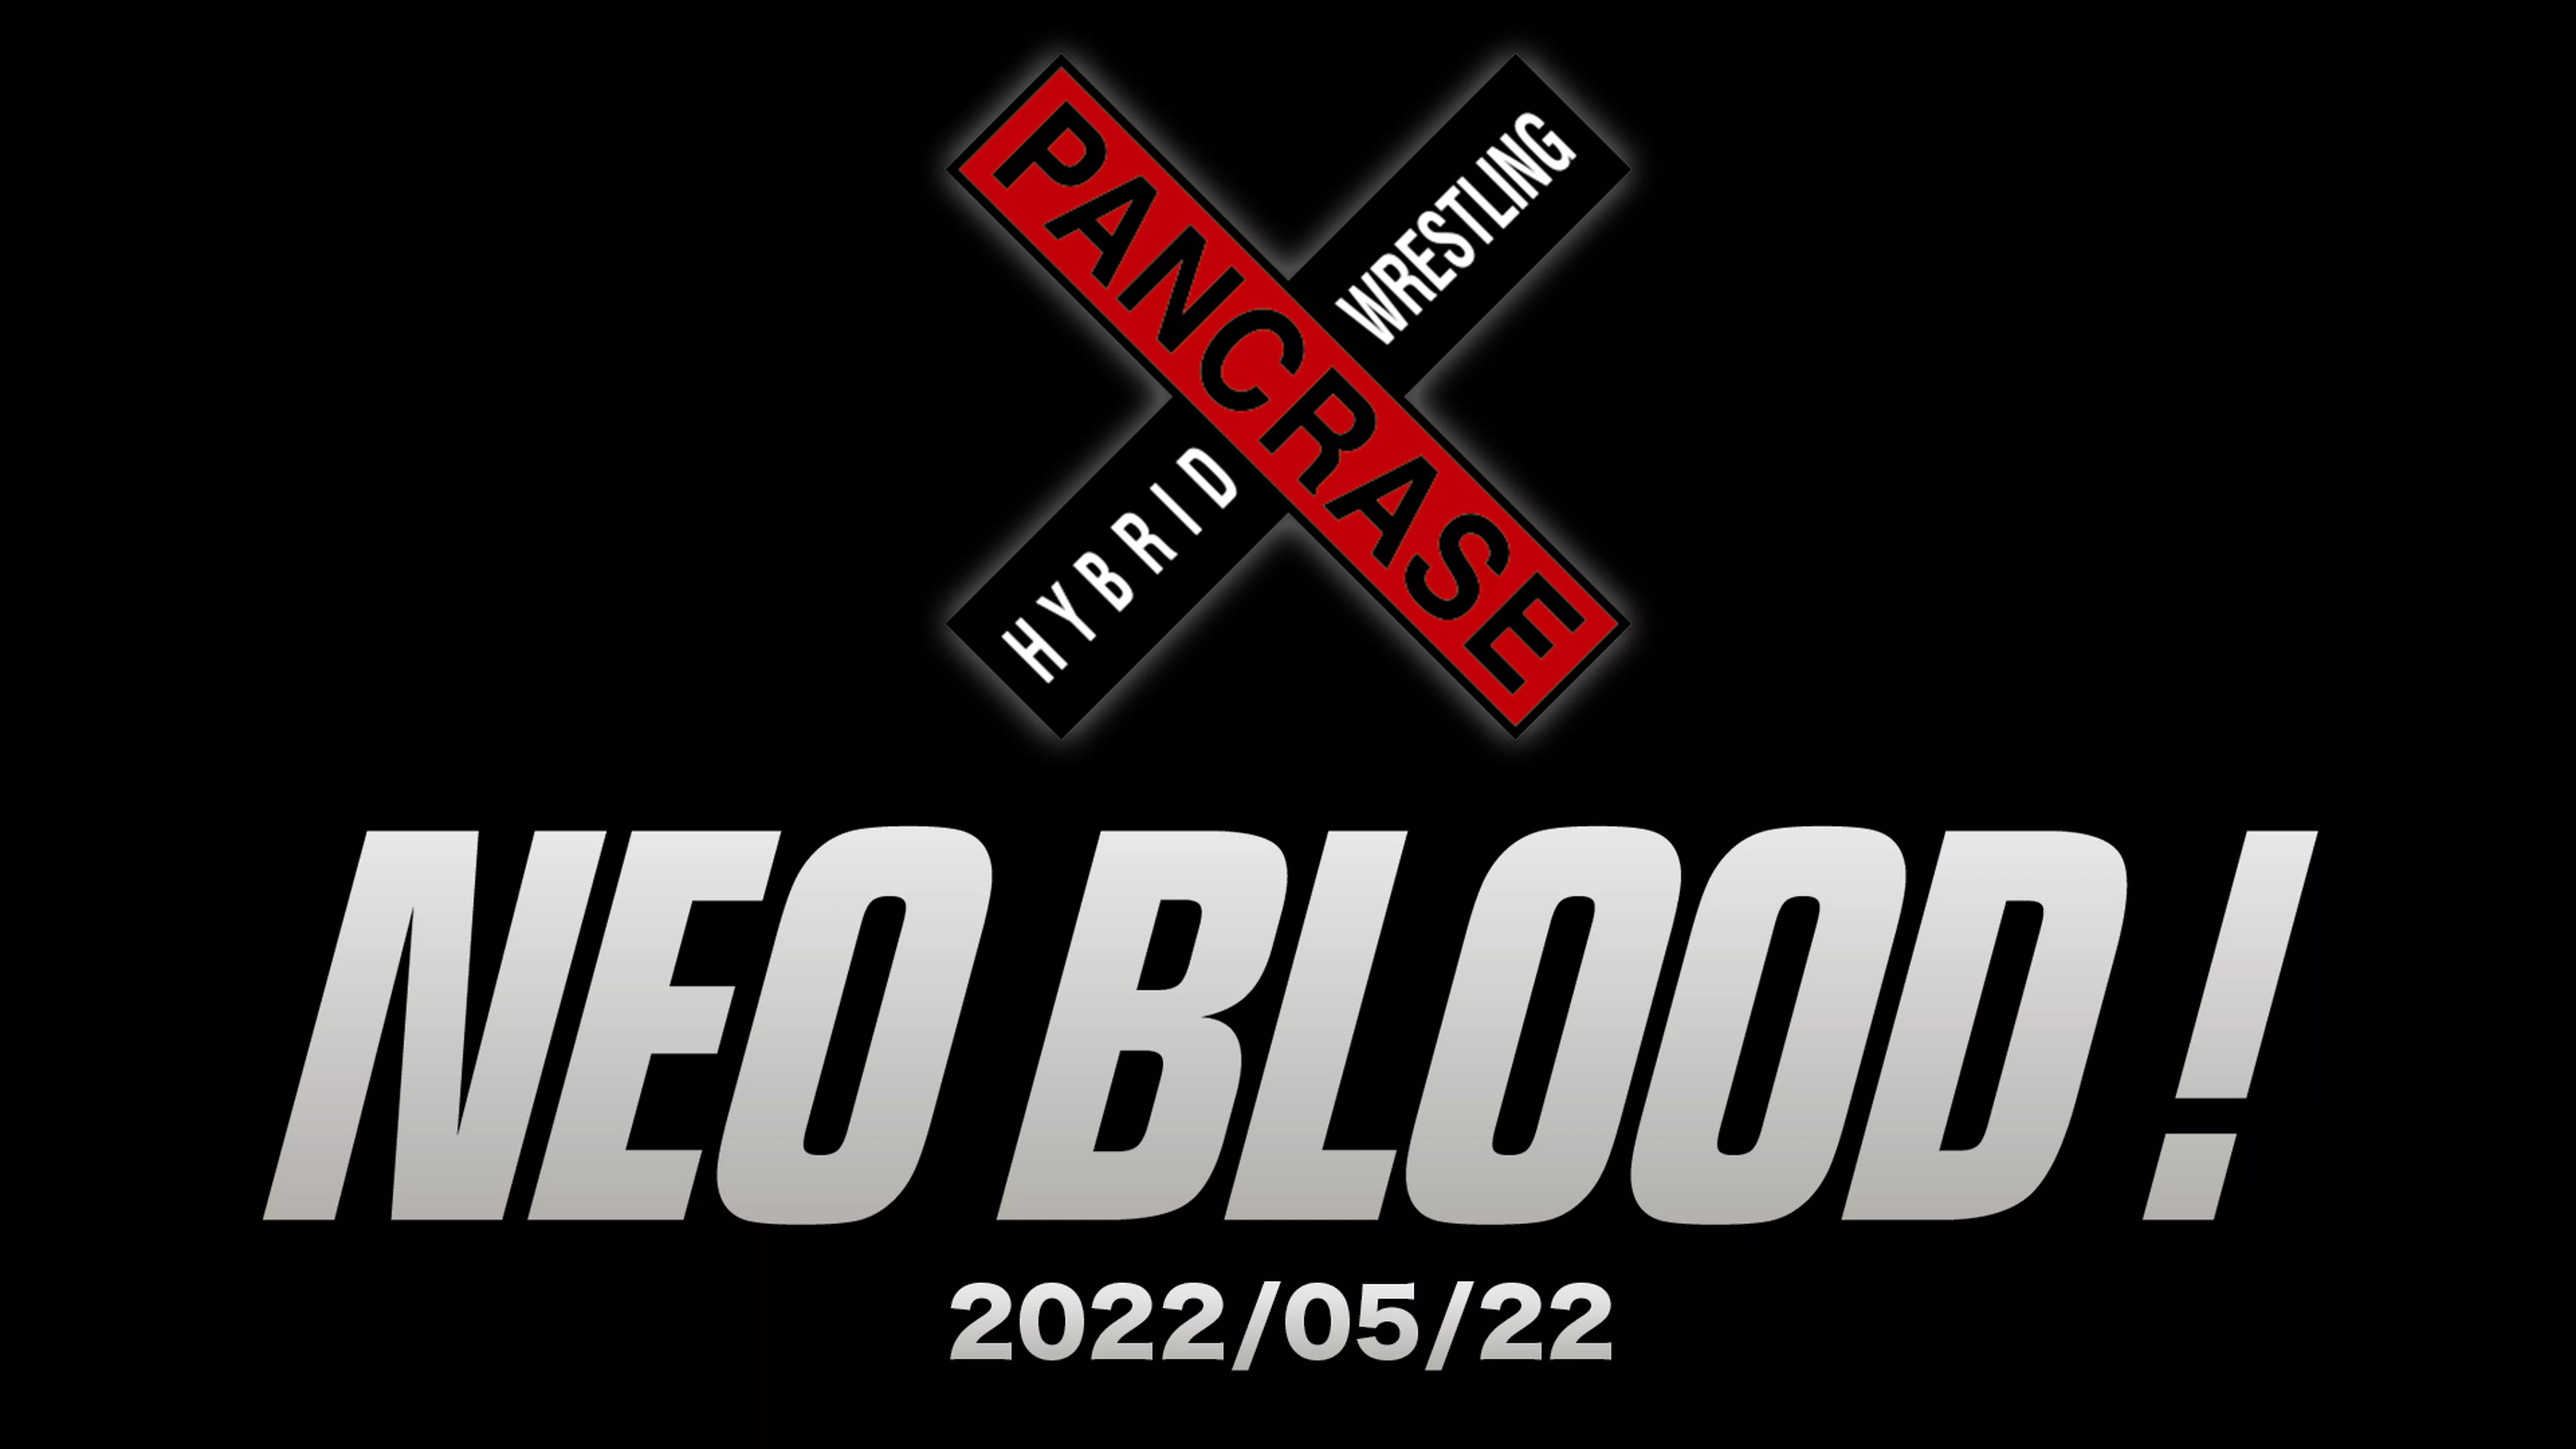 NEO BLOOD! 2022/05/22